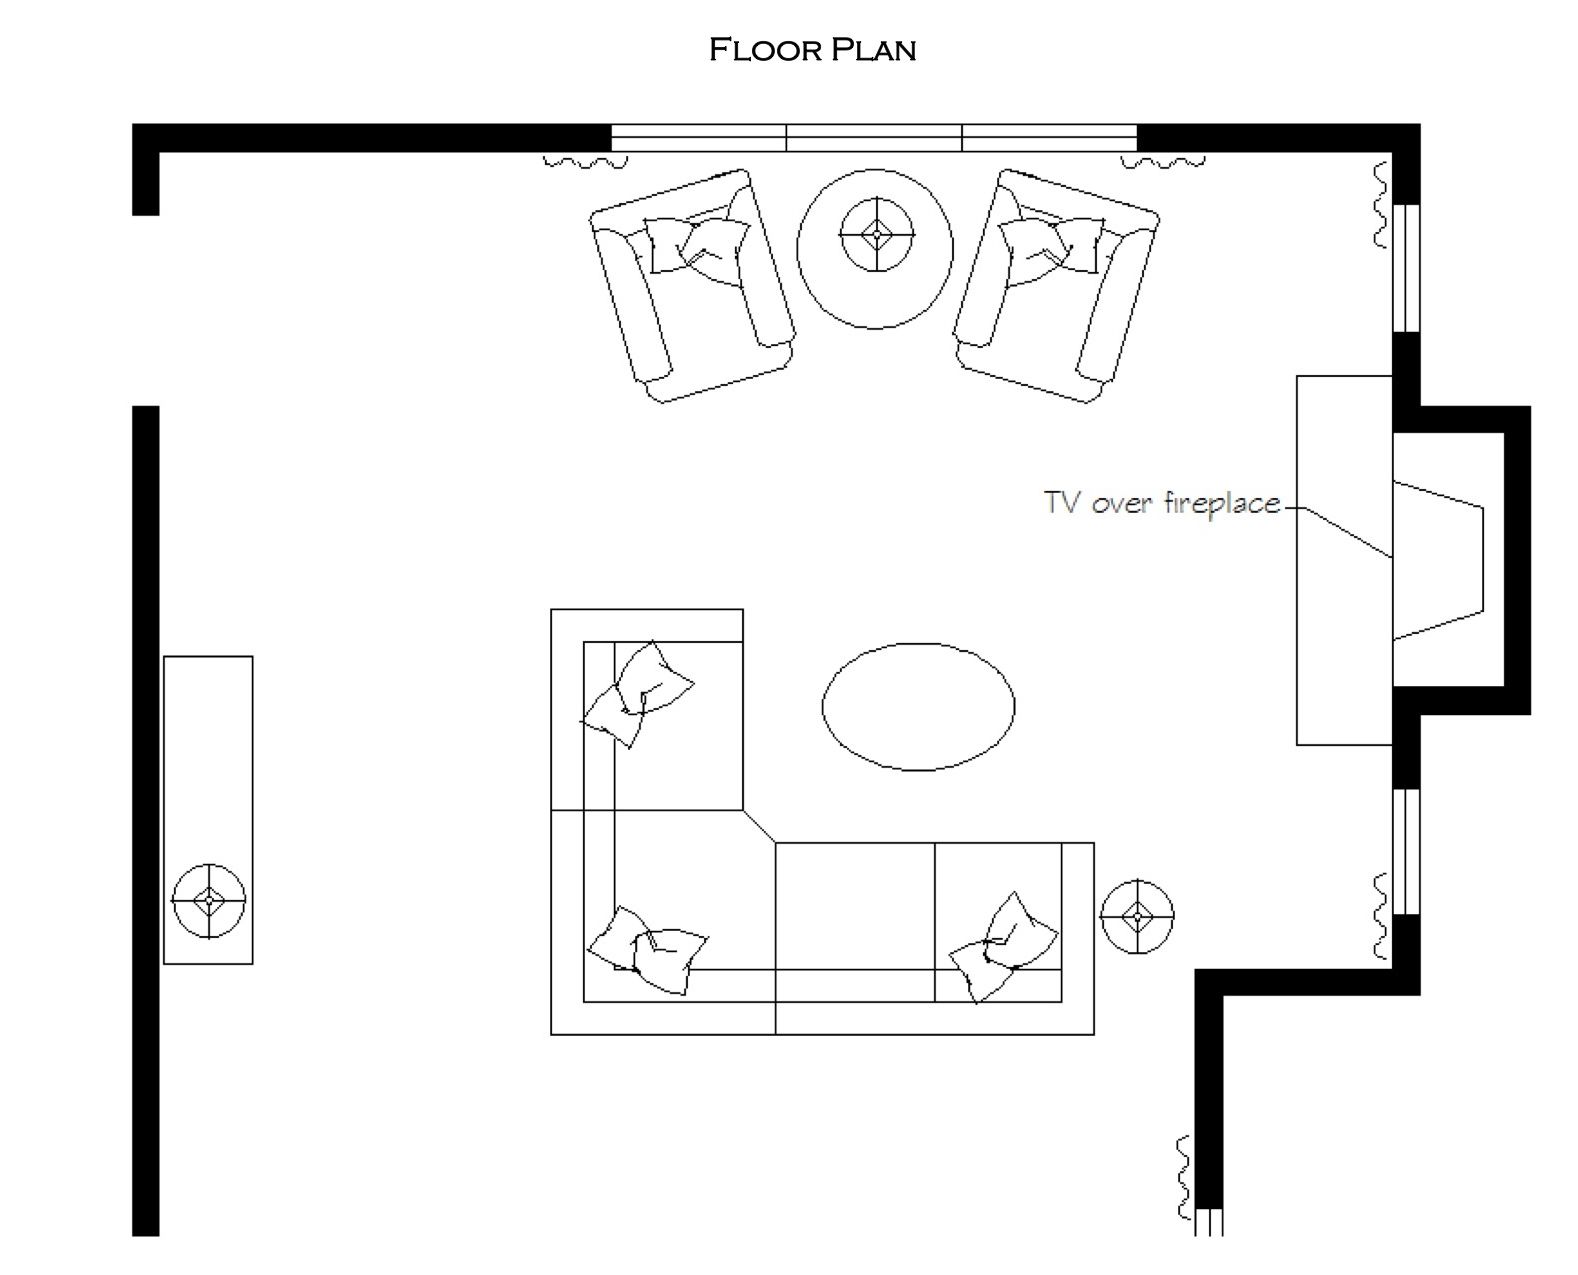 floorplan for living room? Family room layout, Living